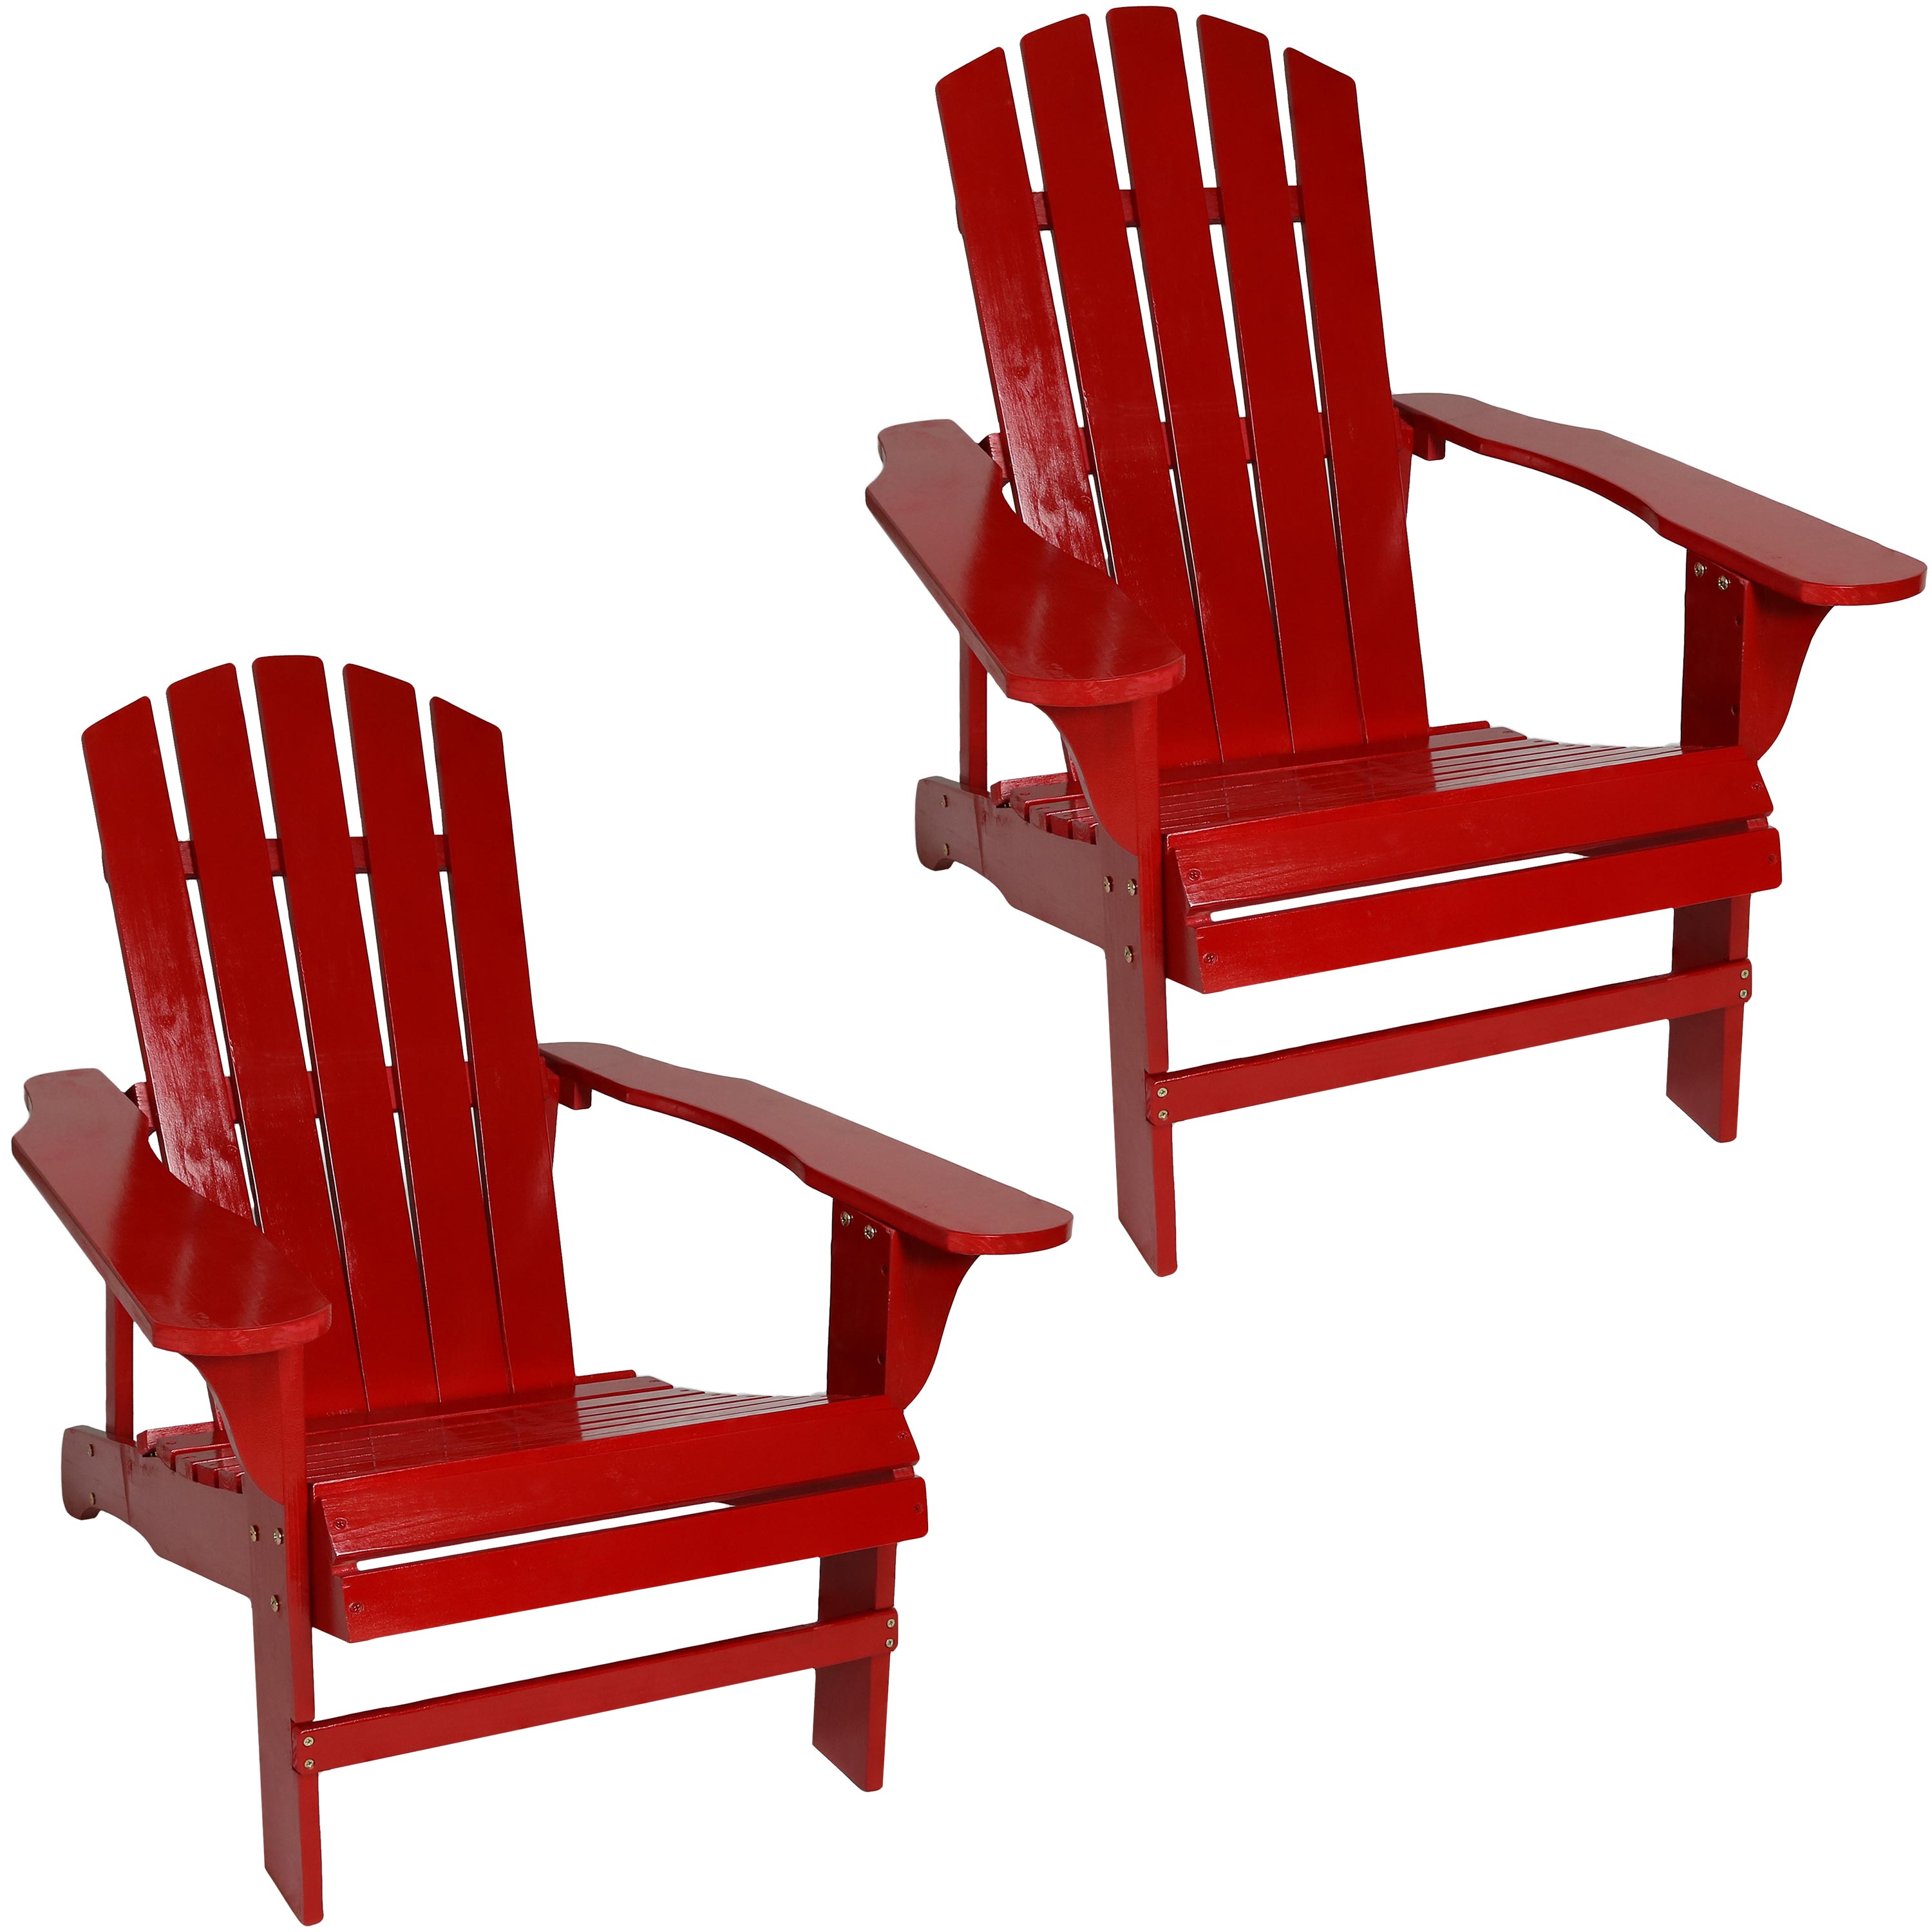 Sunnydaze Coastal Bliss Wooden Adirondack Chair - Set of 2 - Red